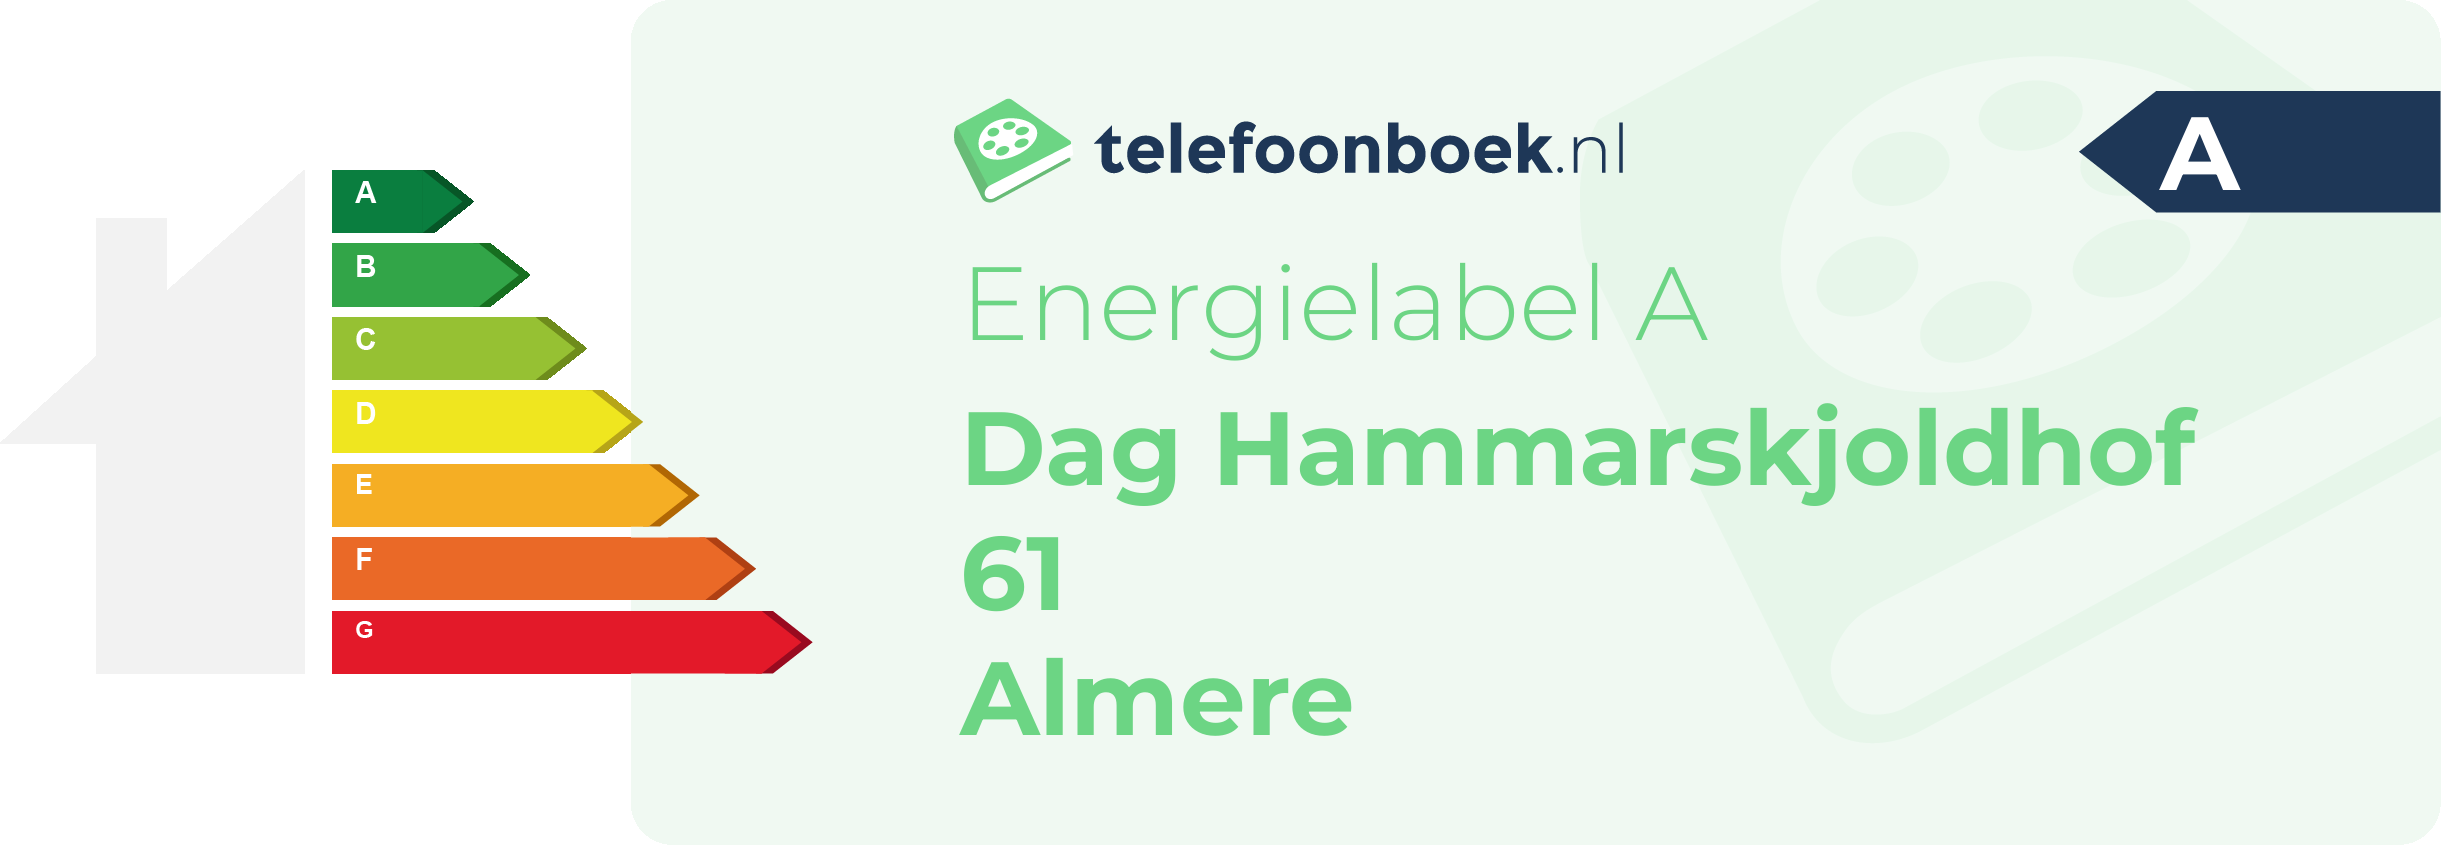 Energielabel Dag Hammarskjoldhof 61 Almere